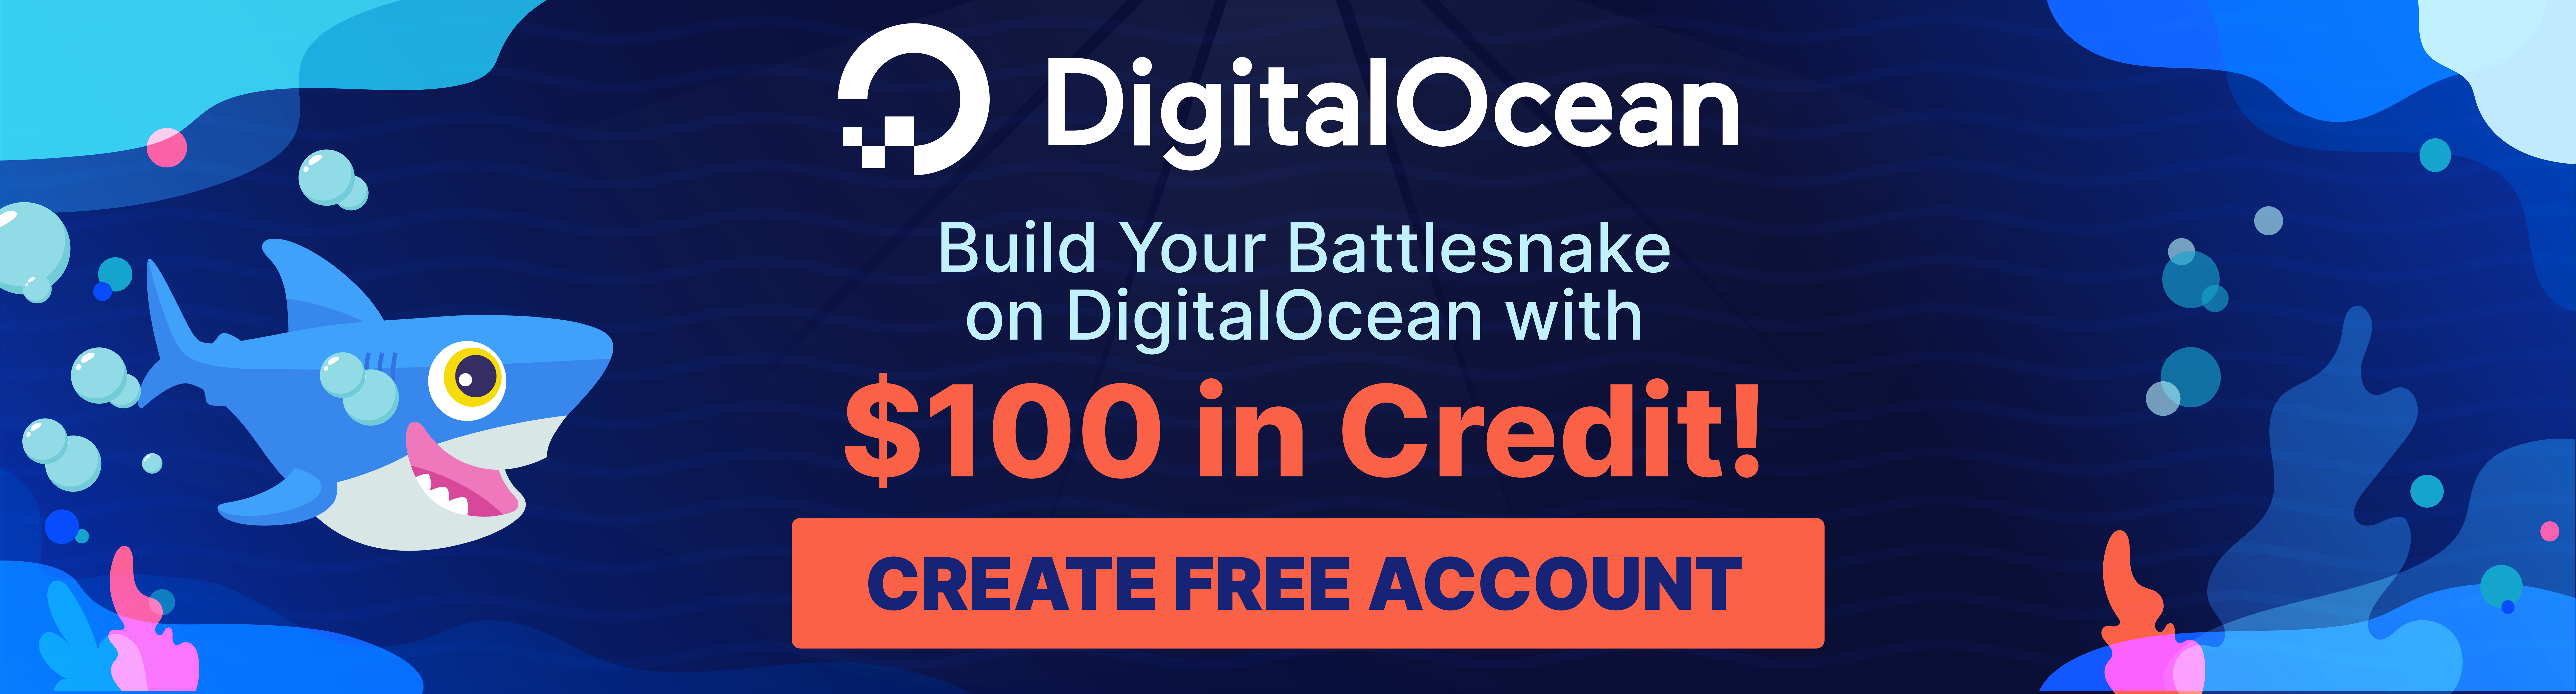 Digital Ocean $100 Offer